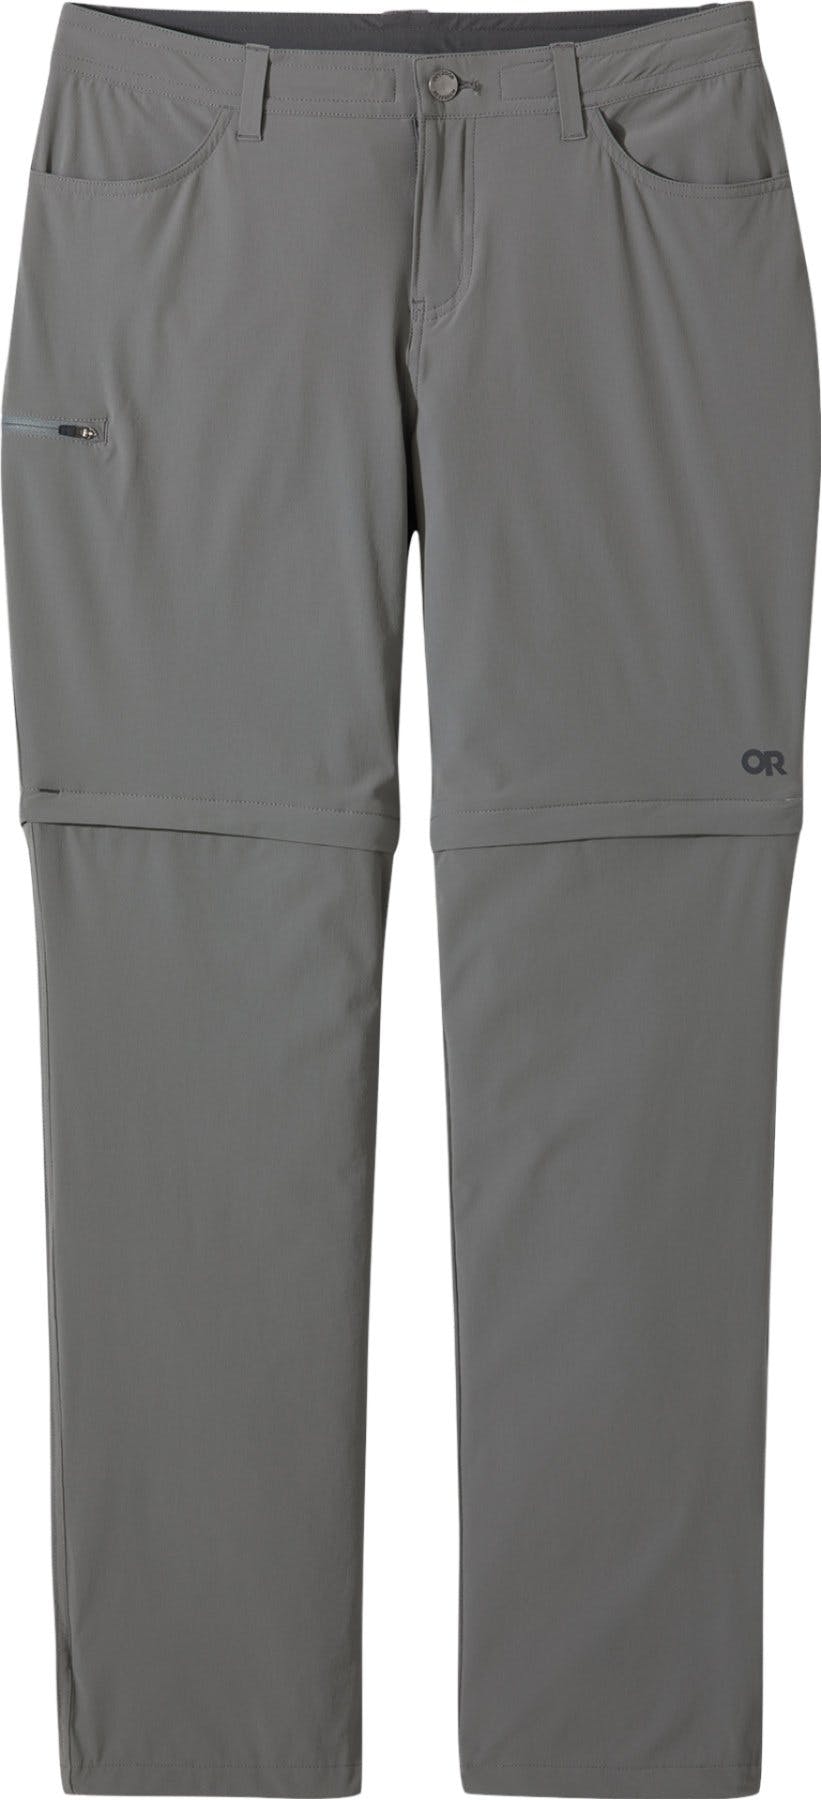 Product image for Ferrosi Convert Short Pant - Women's